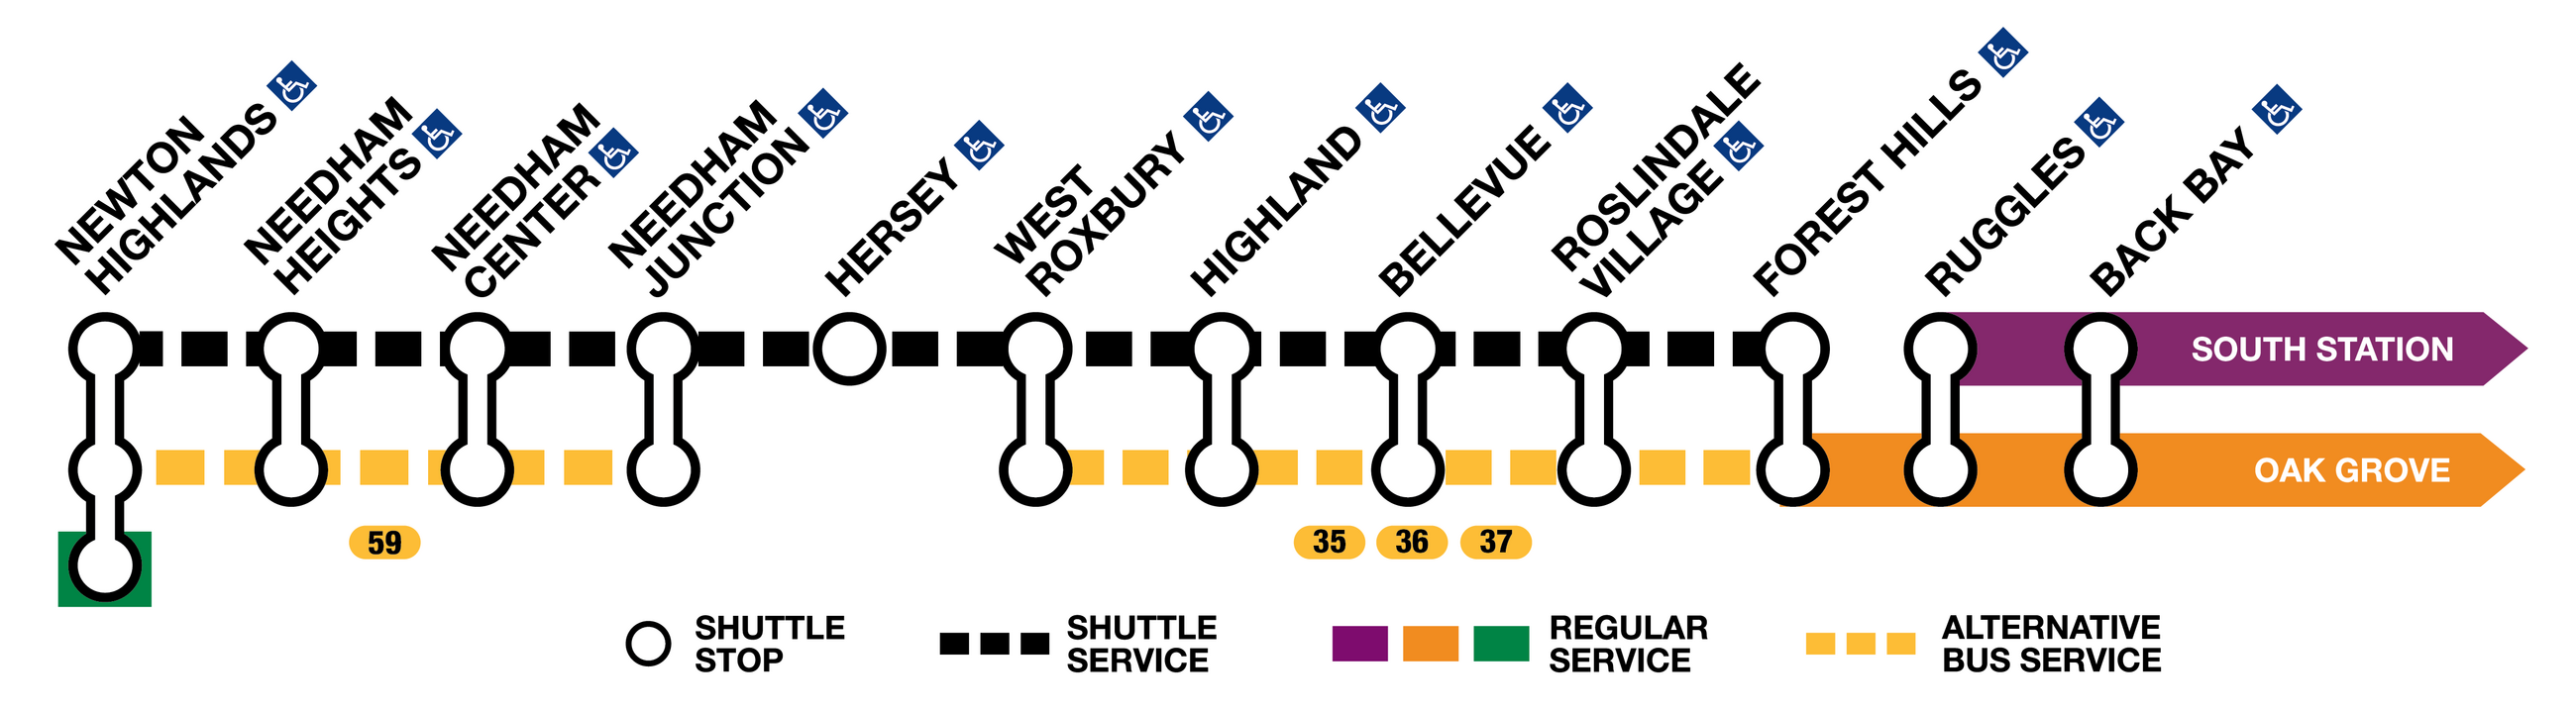 Shuttle service graphic for the Needham Line closure